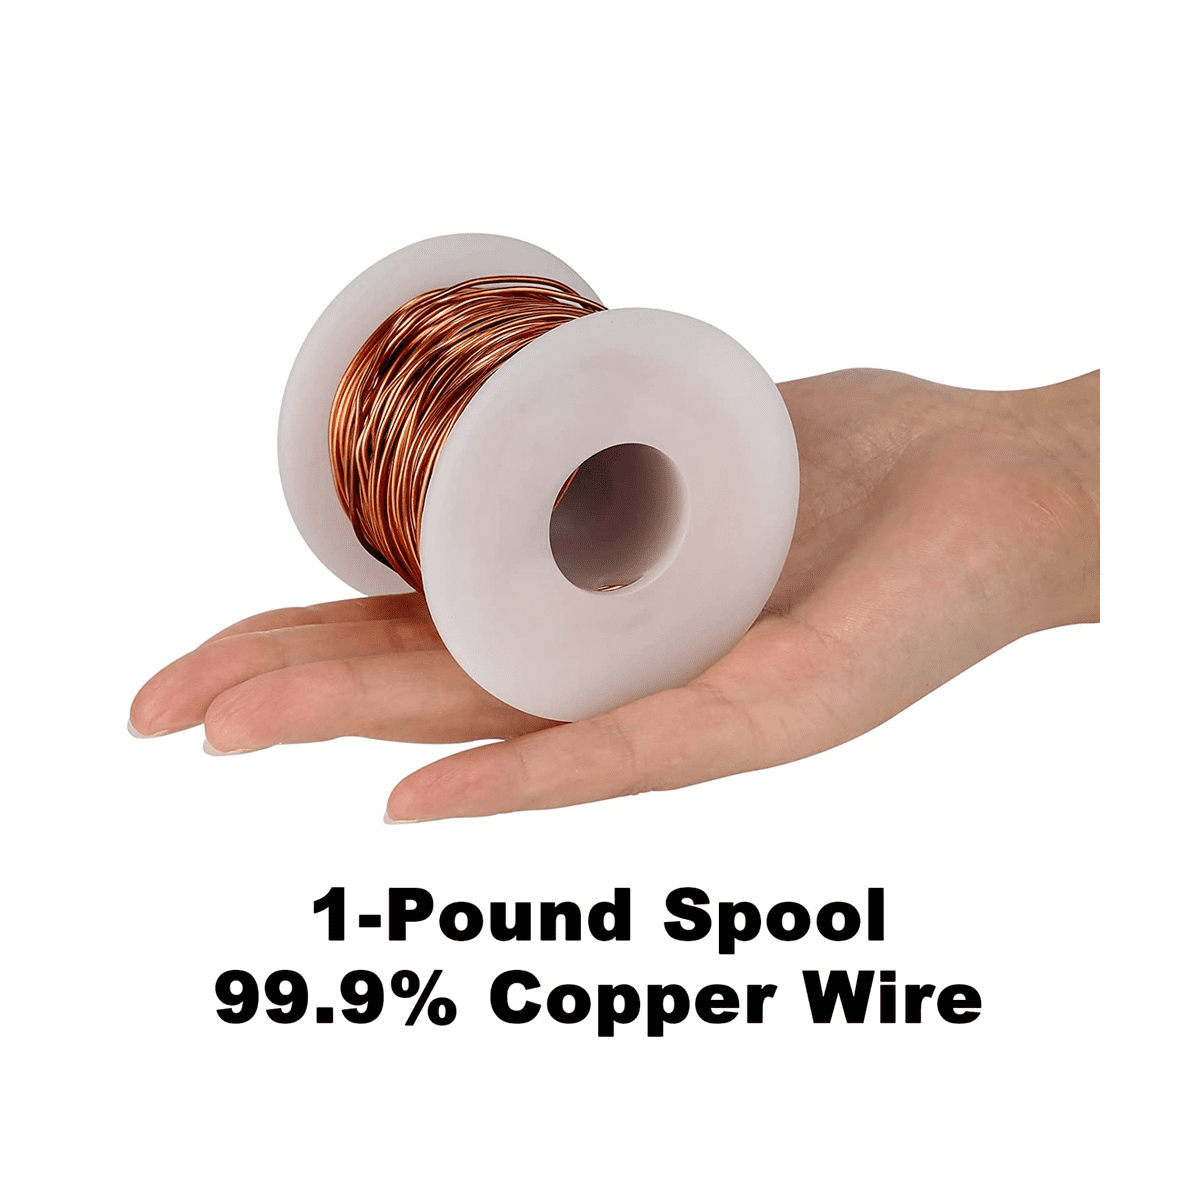 9 Pack: 16 Gauge Dead Soft Copper Wire by Bead Landing™